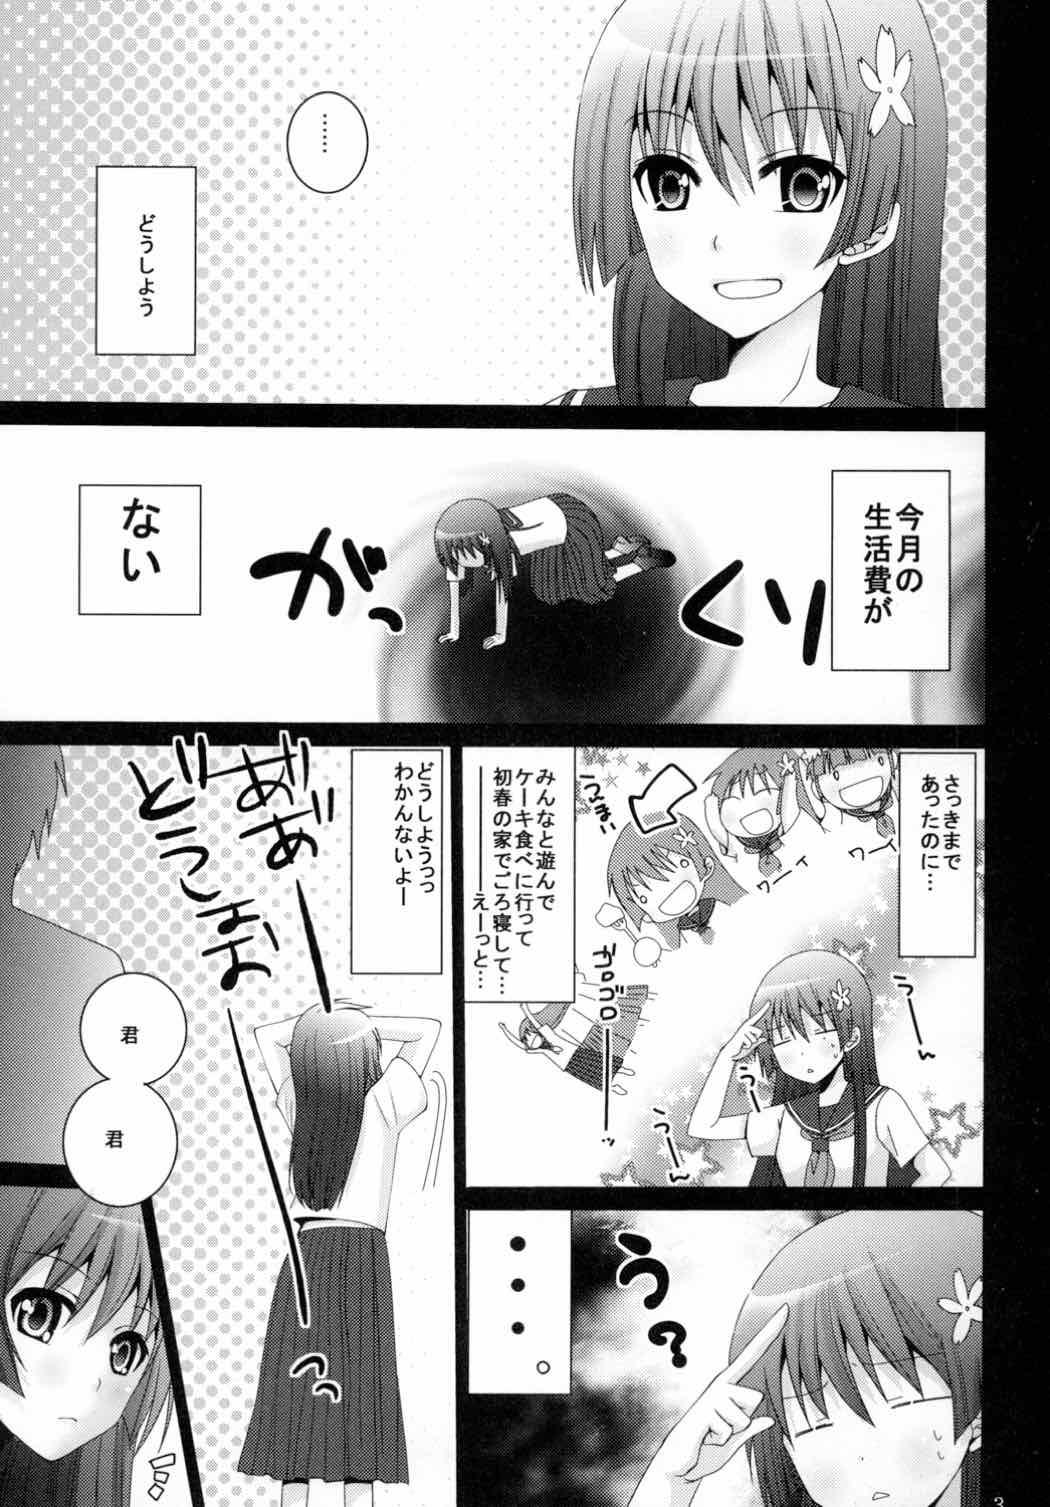 Fun Maid in Saten - Toaru kagaku no railgun Arabic - Page 2